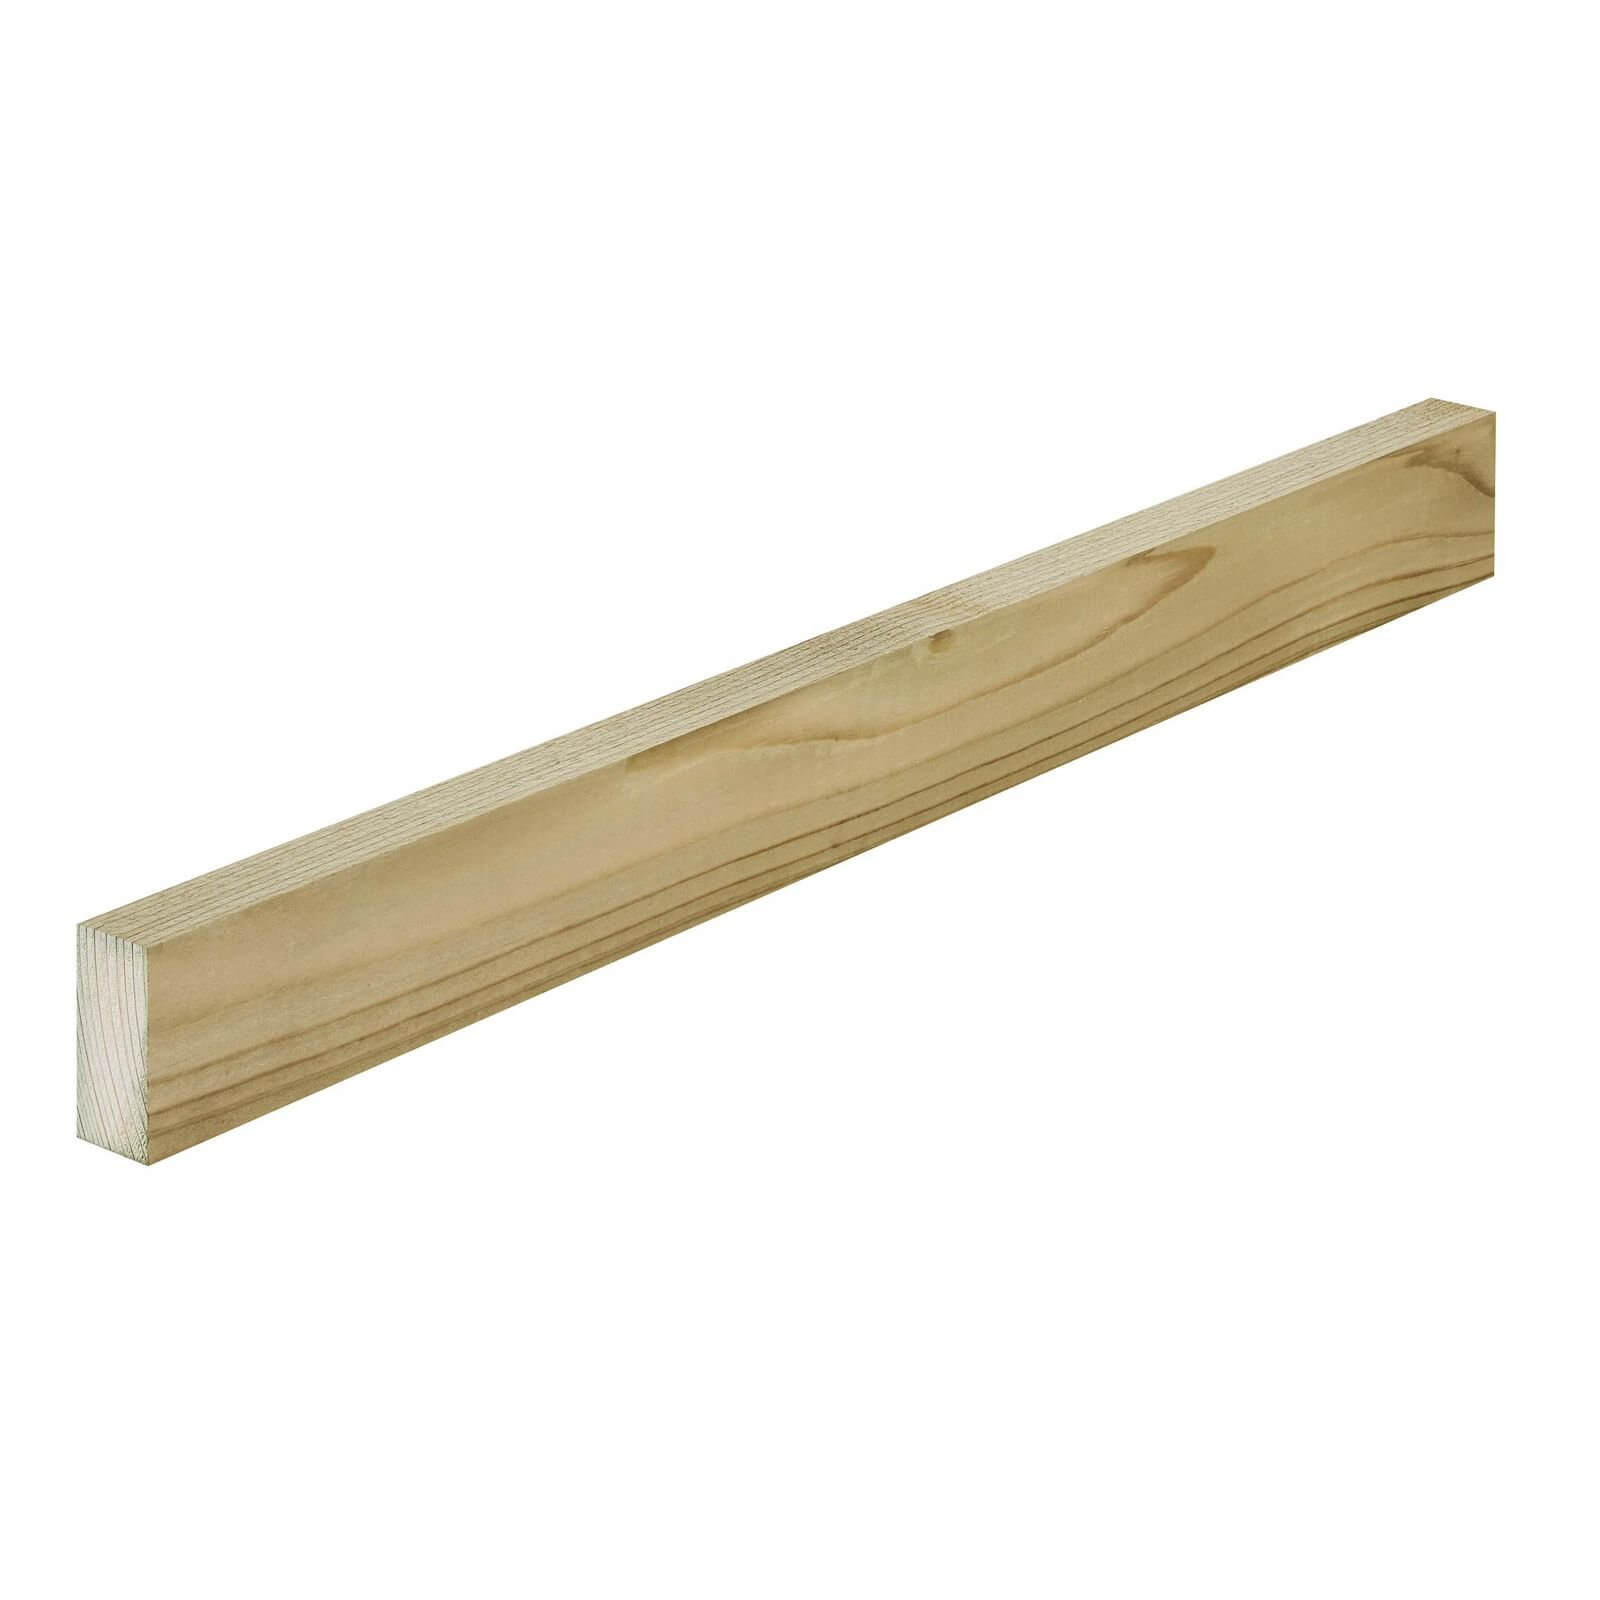 Photo of Metsa Sawn Treated Stick Softwood Timber 1.8m -22mm X 50mm X 1800mm-